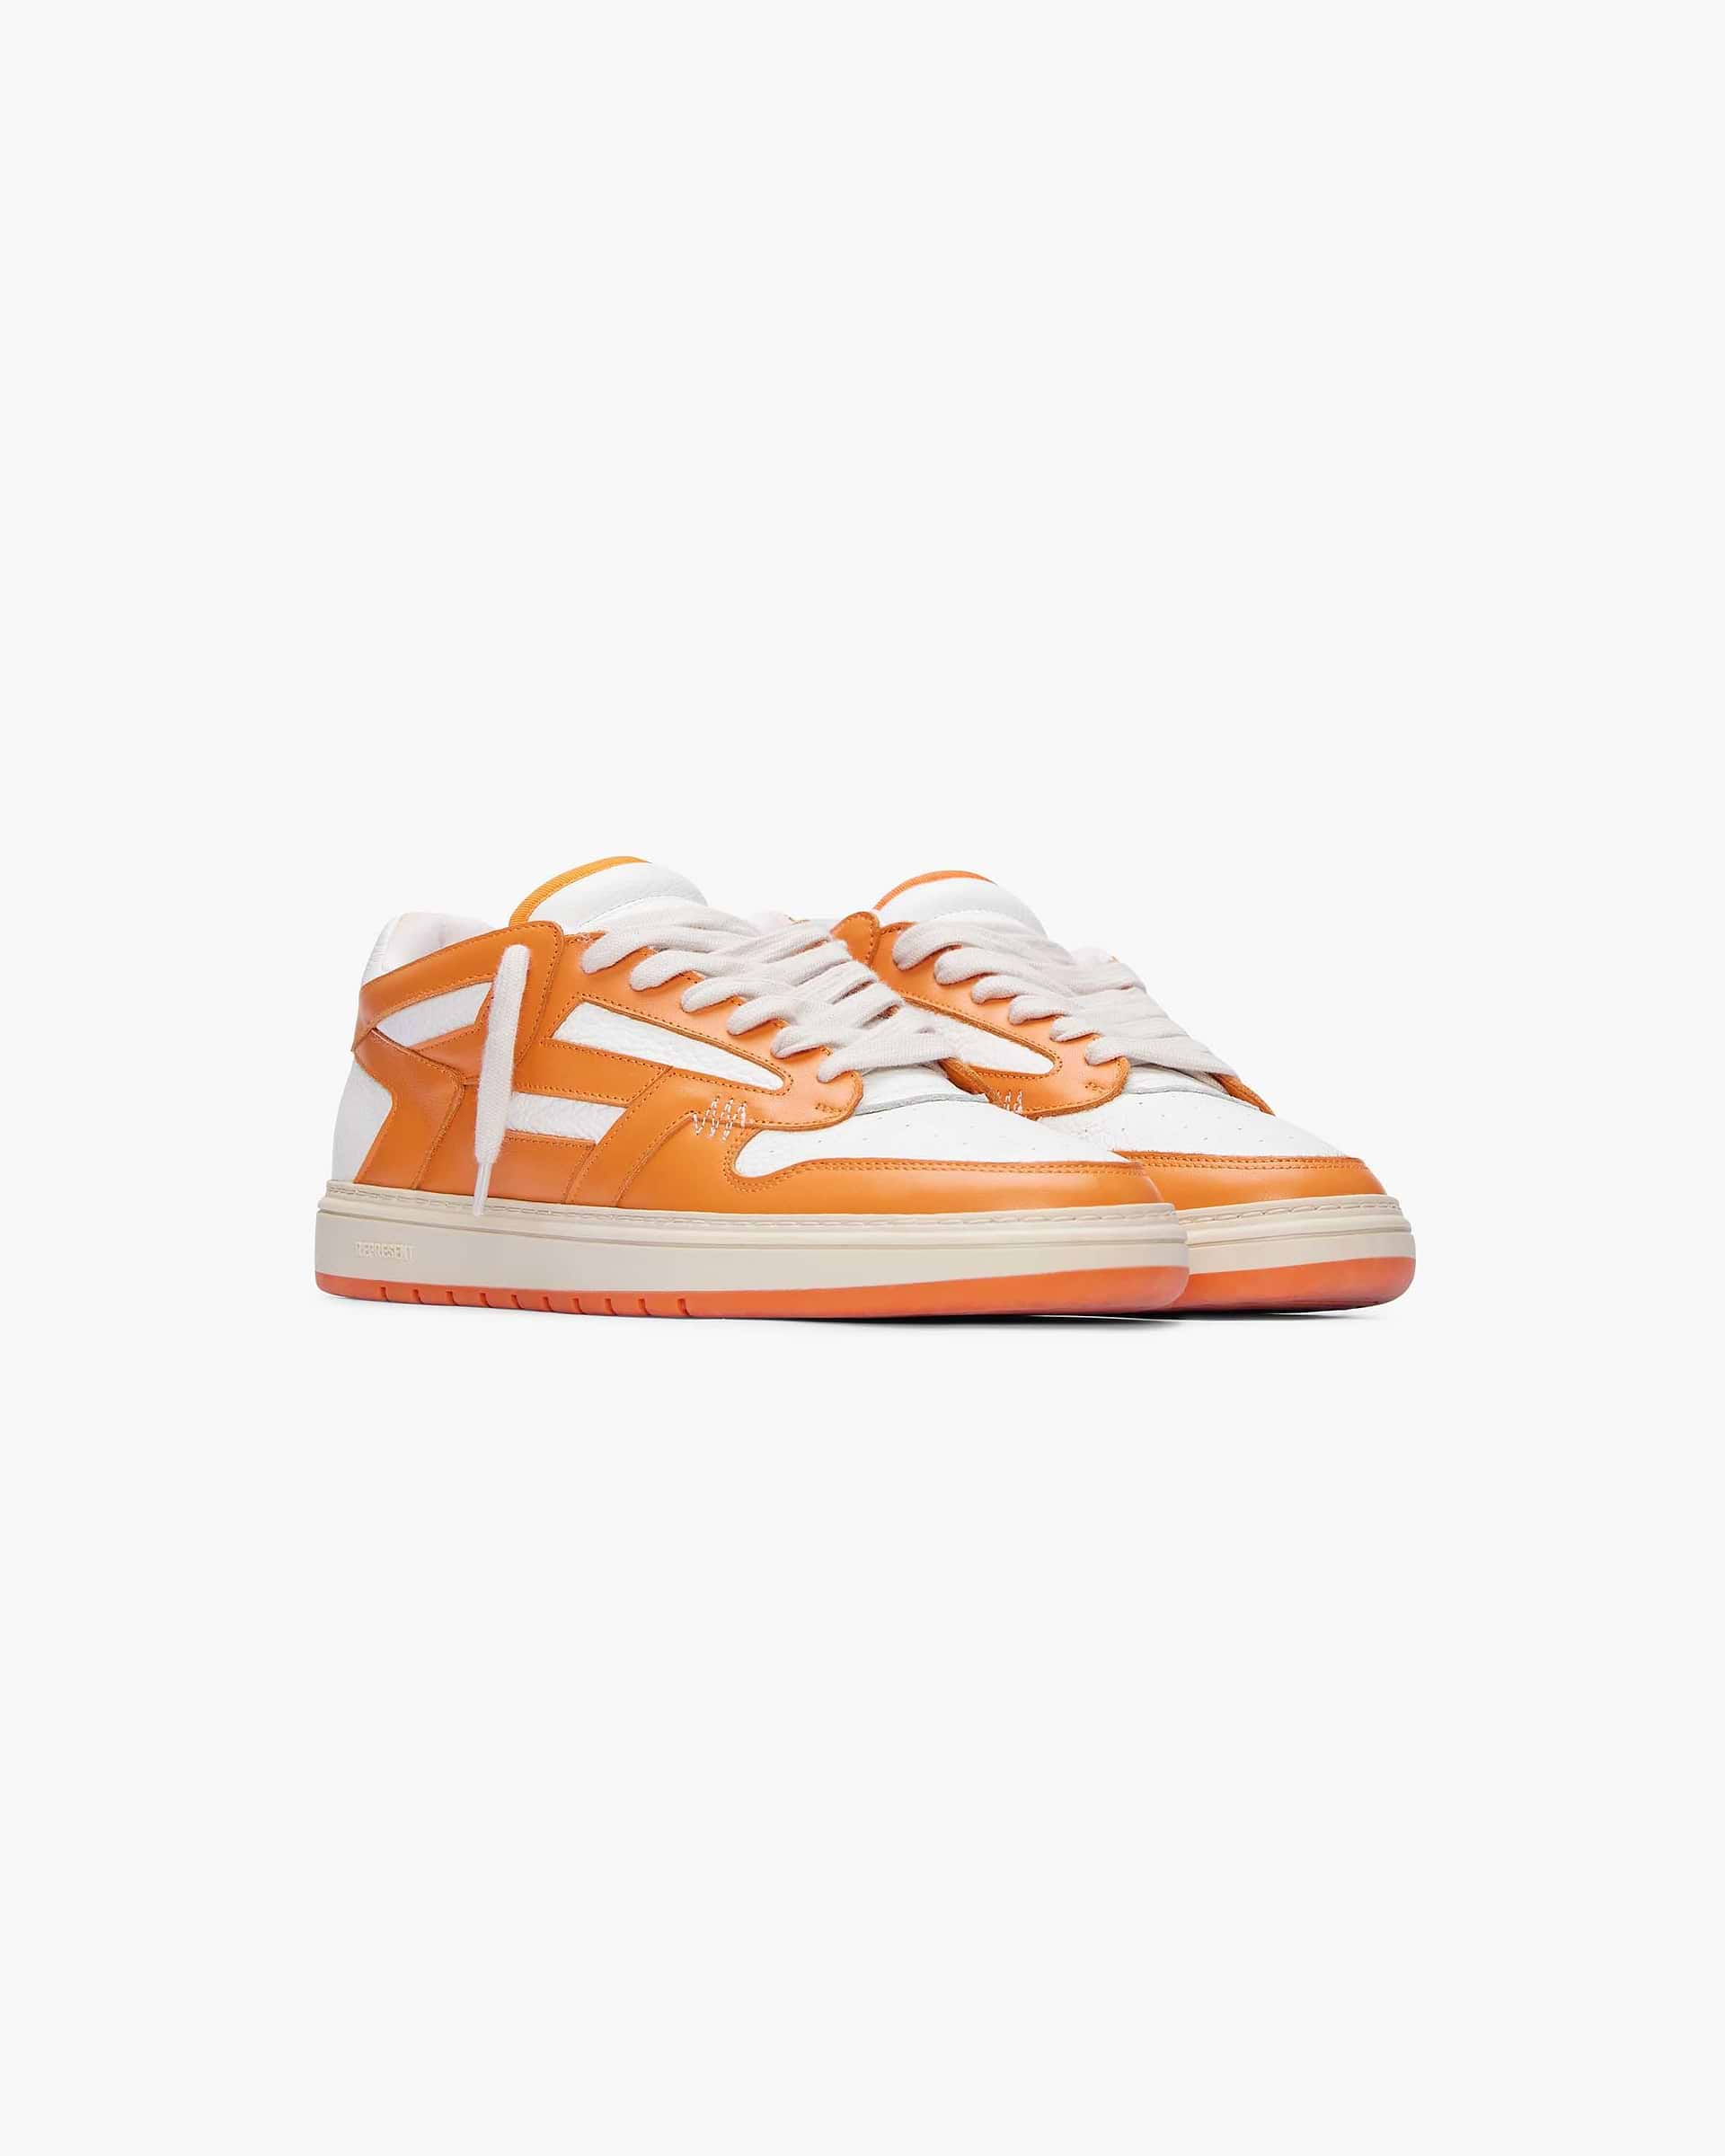 Reptor Low | Neon Orange Footwear SS23 | Represent Clo